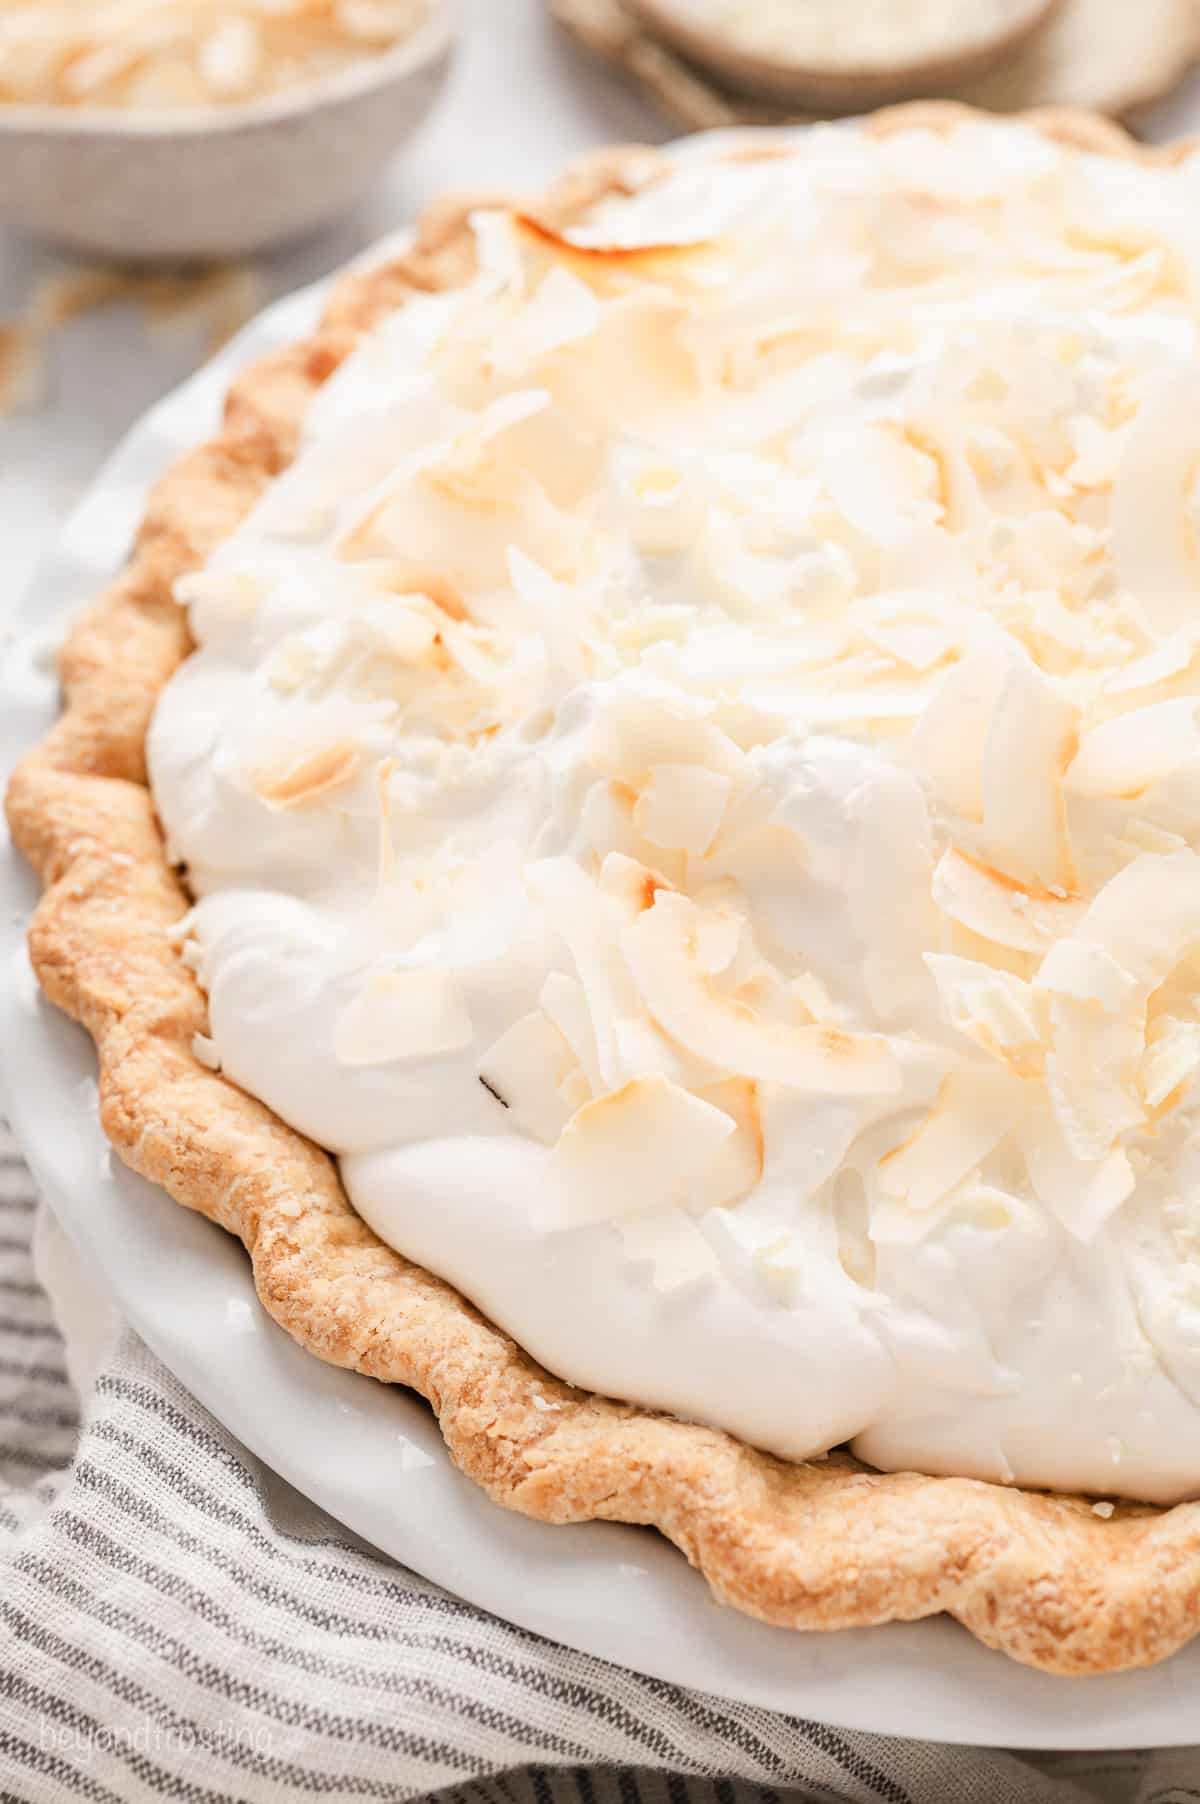 A whole coconut cream pie in a pie plate.